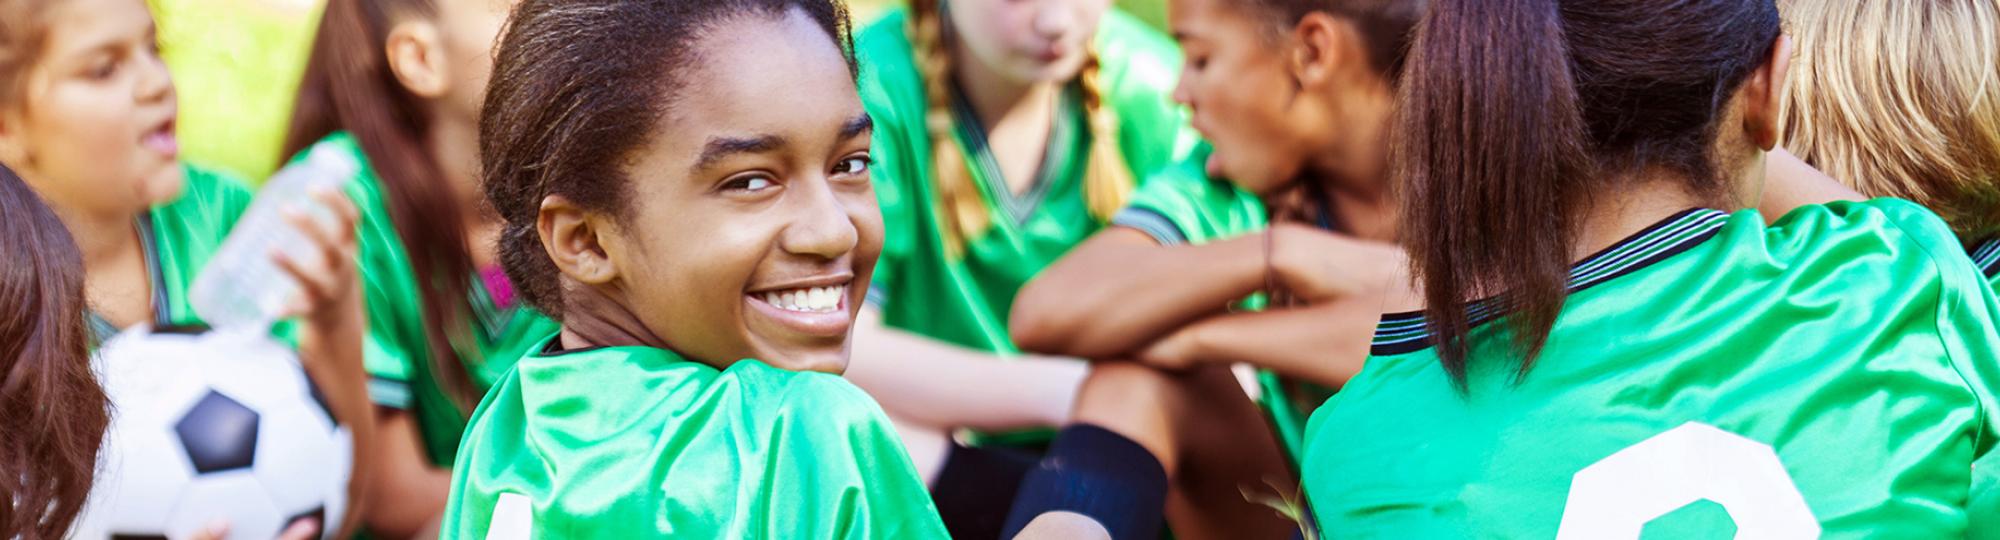 A girls soccer team huddle, wearing green uniforms